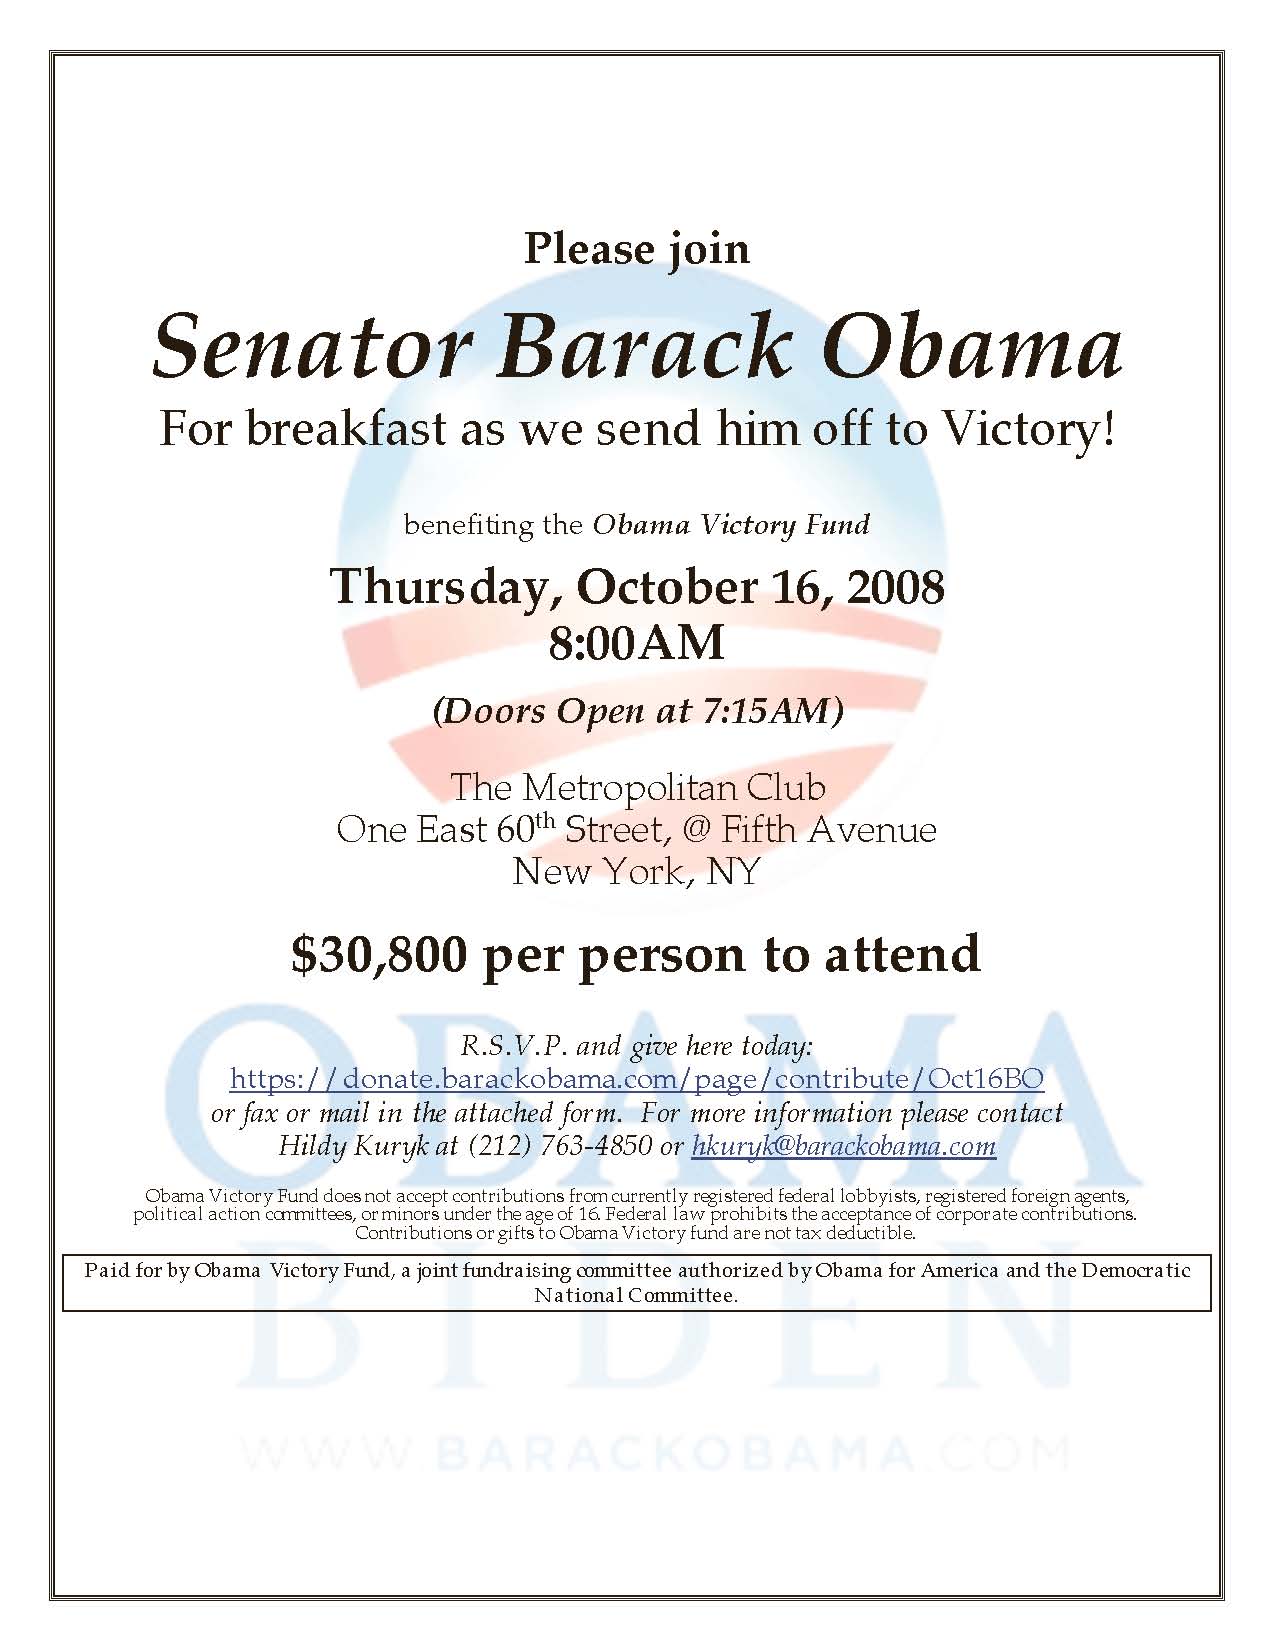 Obama-2008-10-16-Breakfast with Obama-Invite_Page_1.jpg